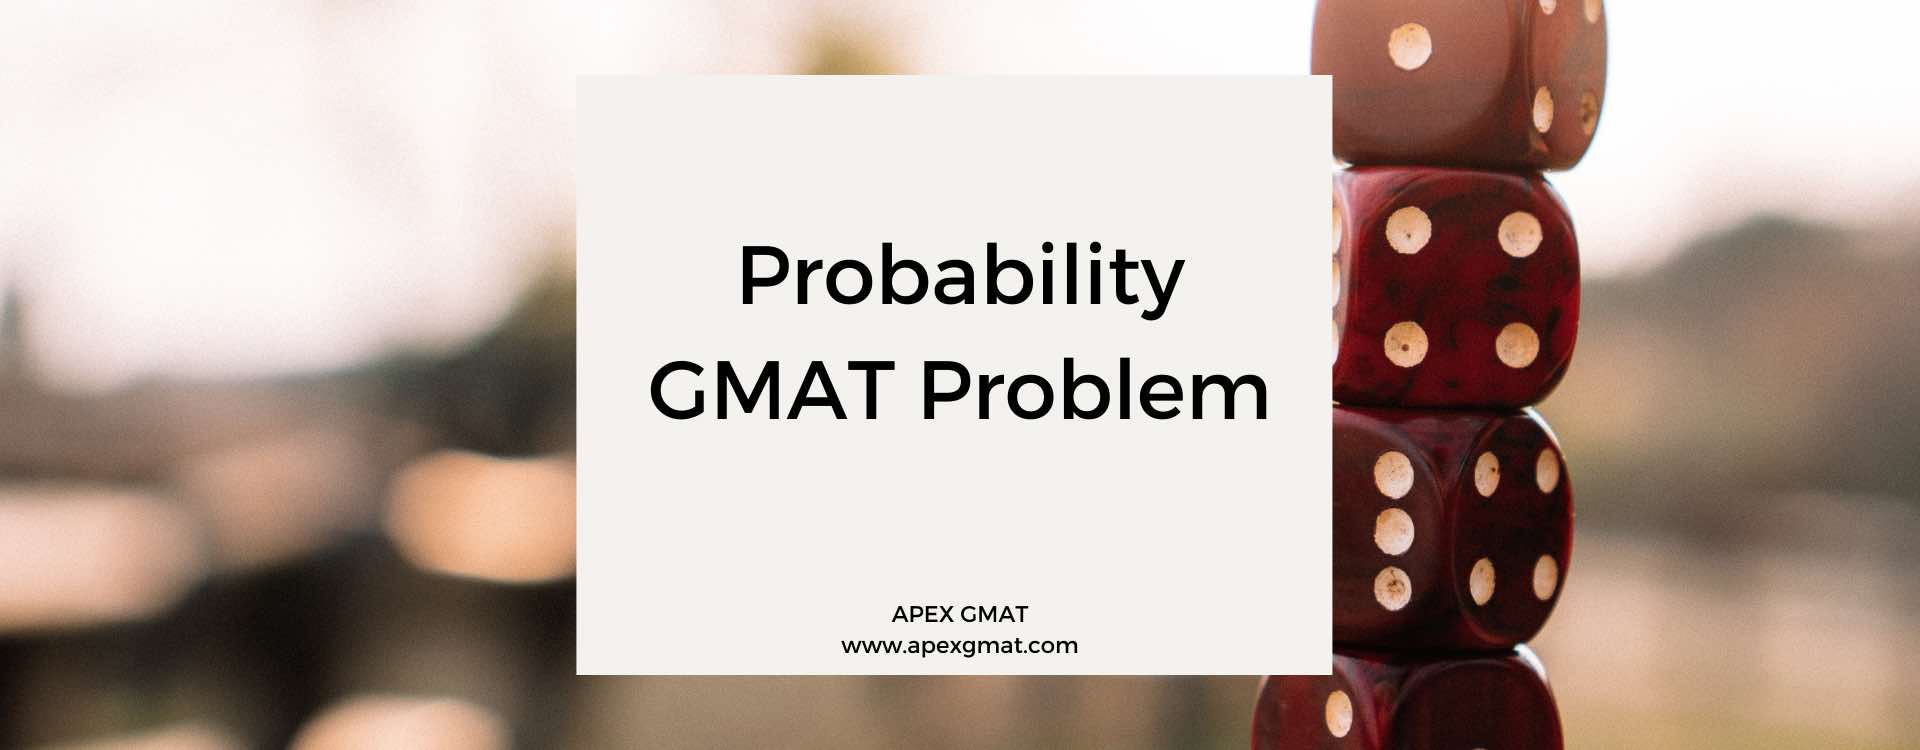 Probability GMAT Problem